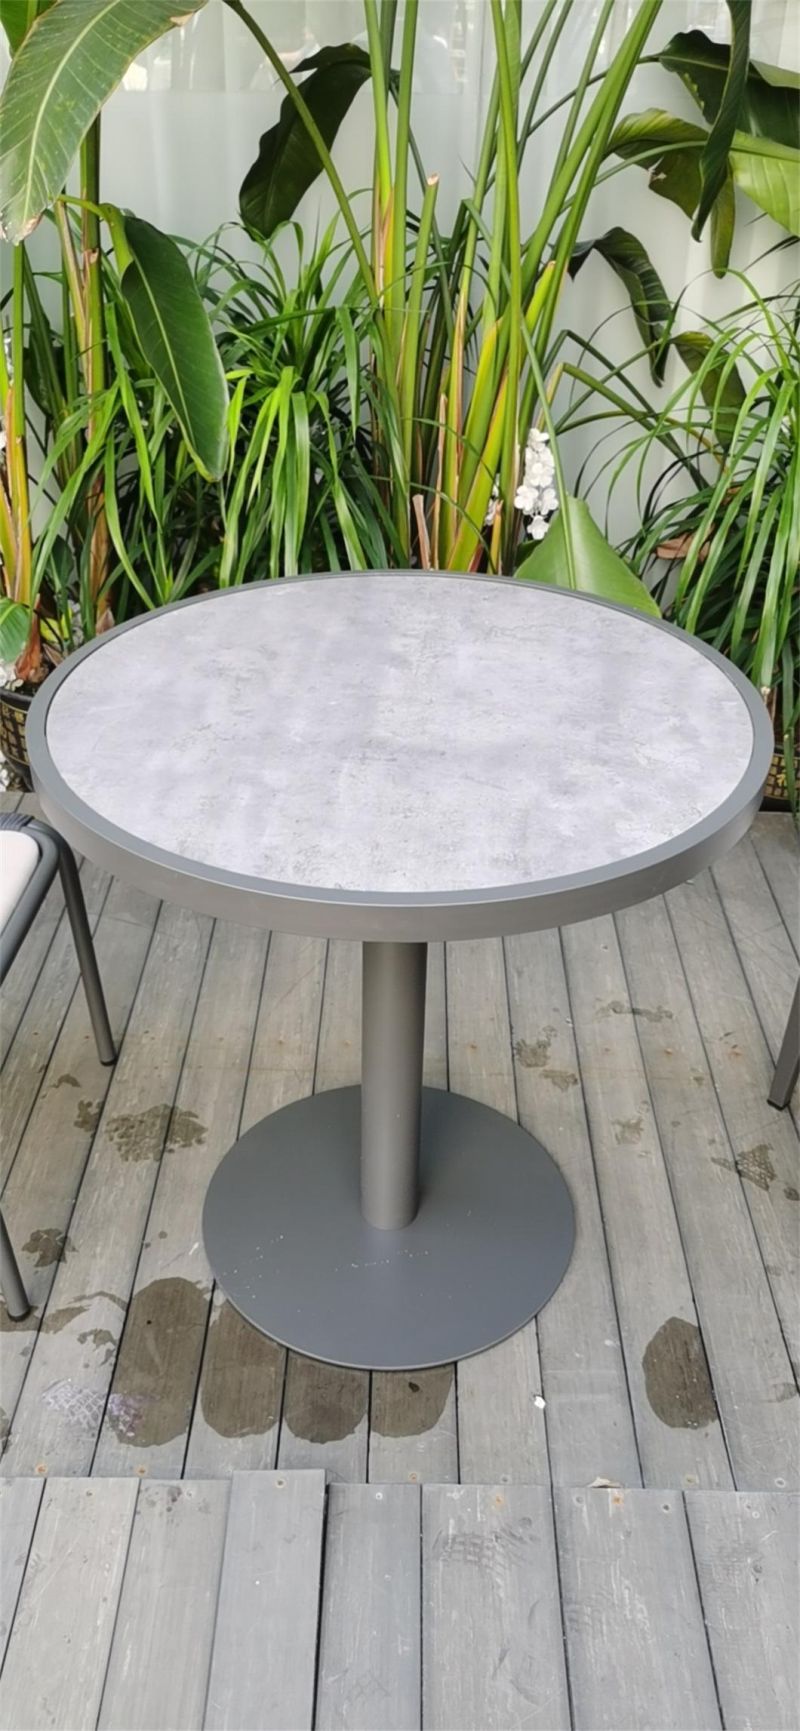 Outdoor New Style Wooden Garden Patio Outdoor Aluminum Coffee Table